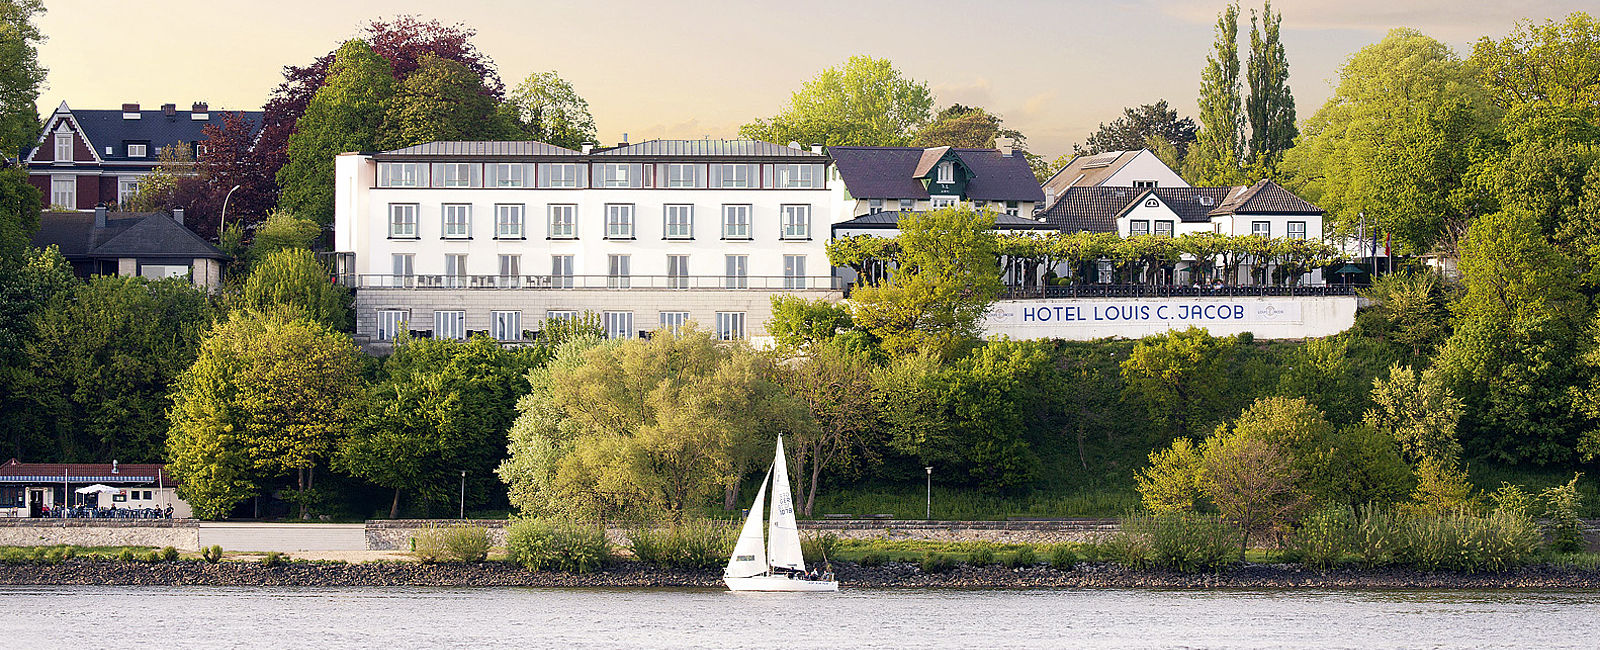 VERY SPECIAL HOTEL
 Hotel Louis C. Jacob 
 Erste Adresse an der Elbe 